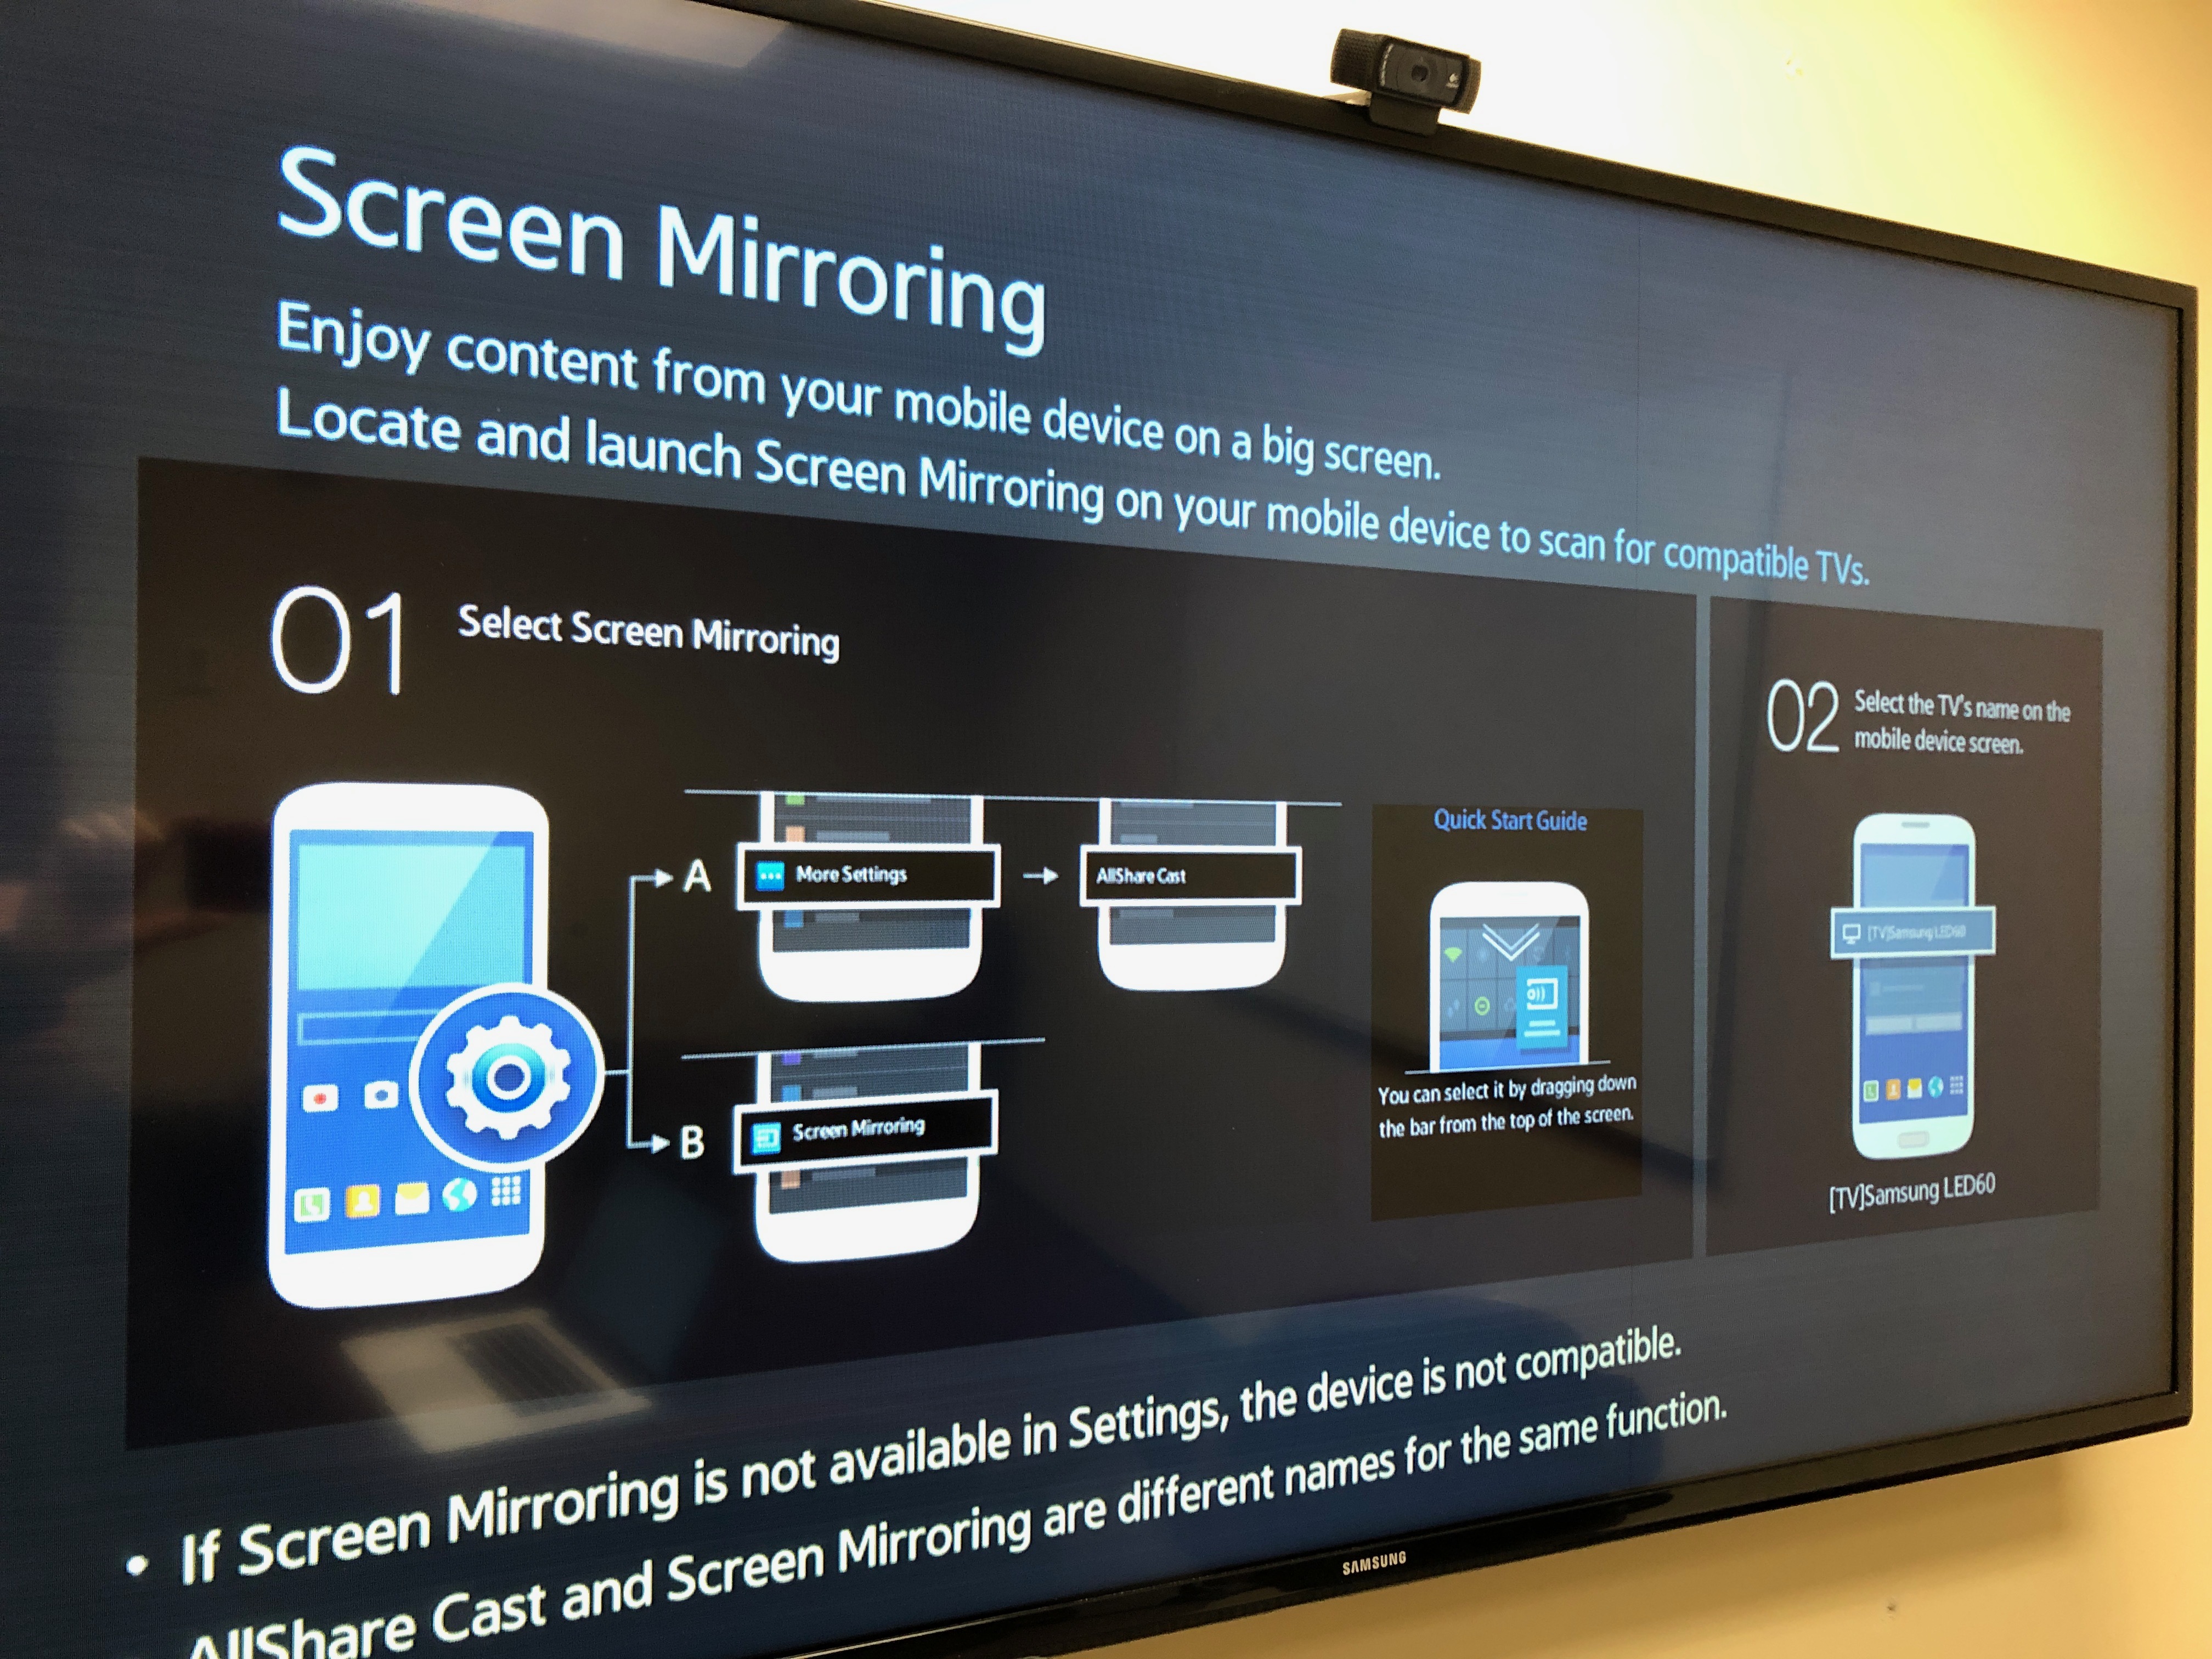 screen mirroring